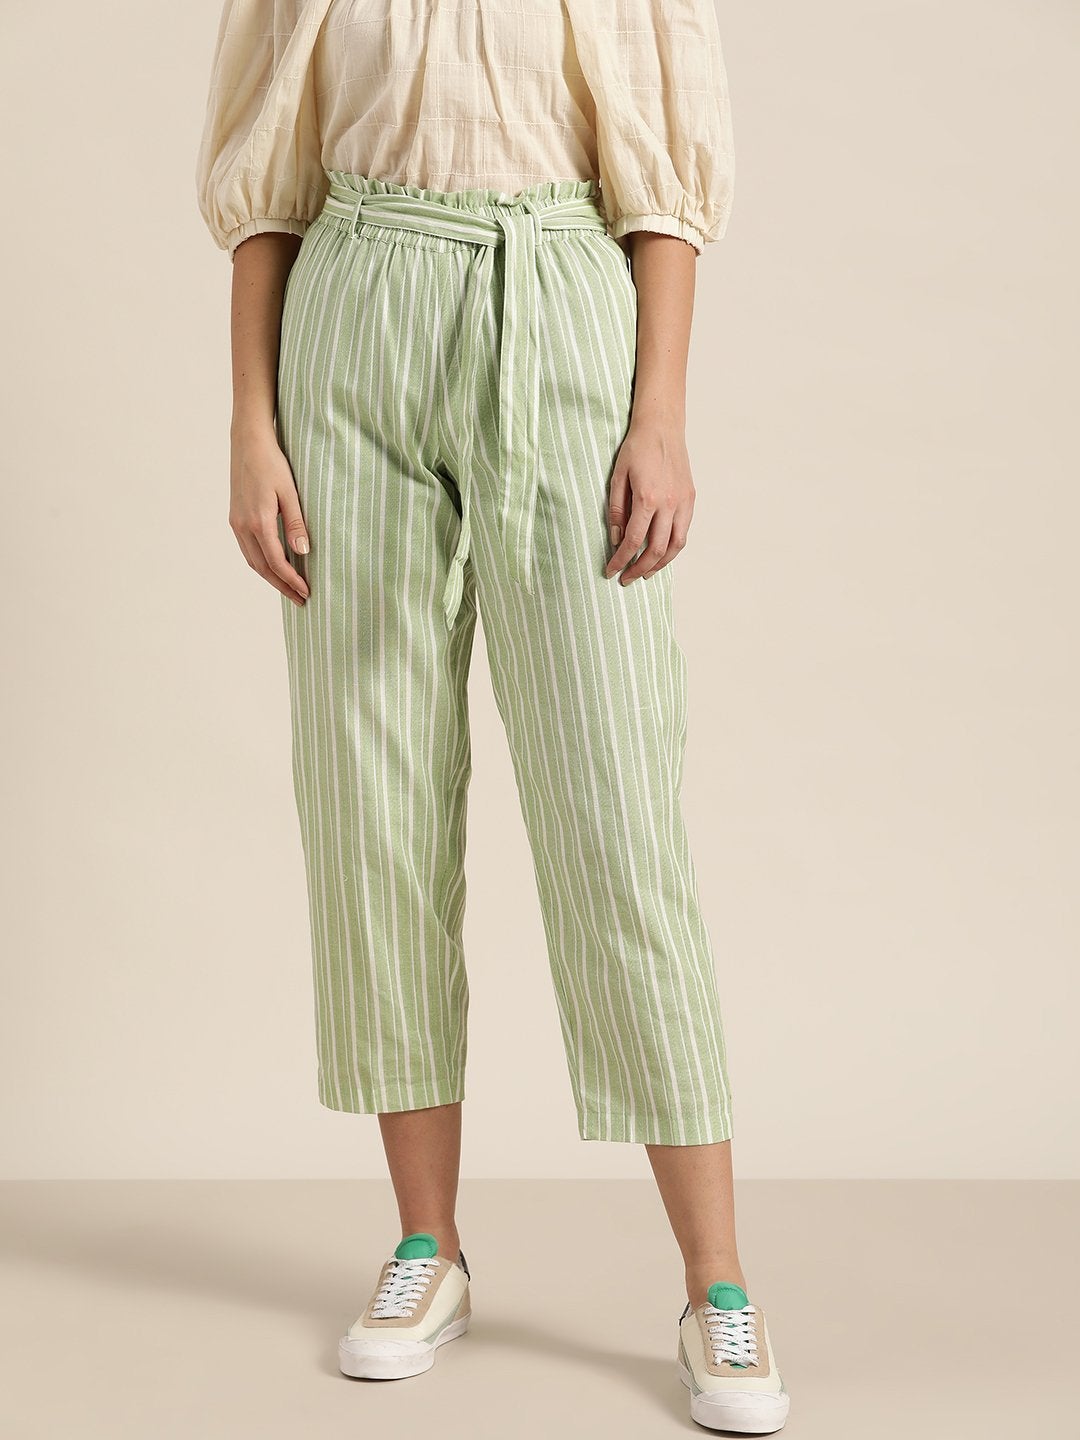 Women's Green Stripes Paperbag Waist Pants - SHAE